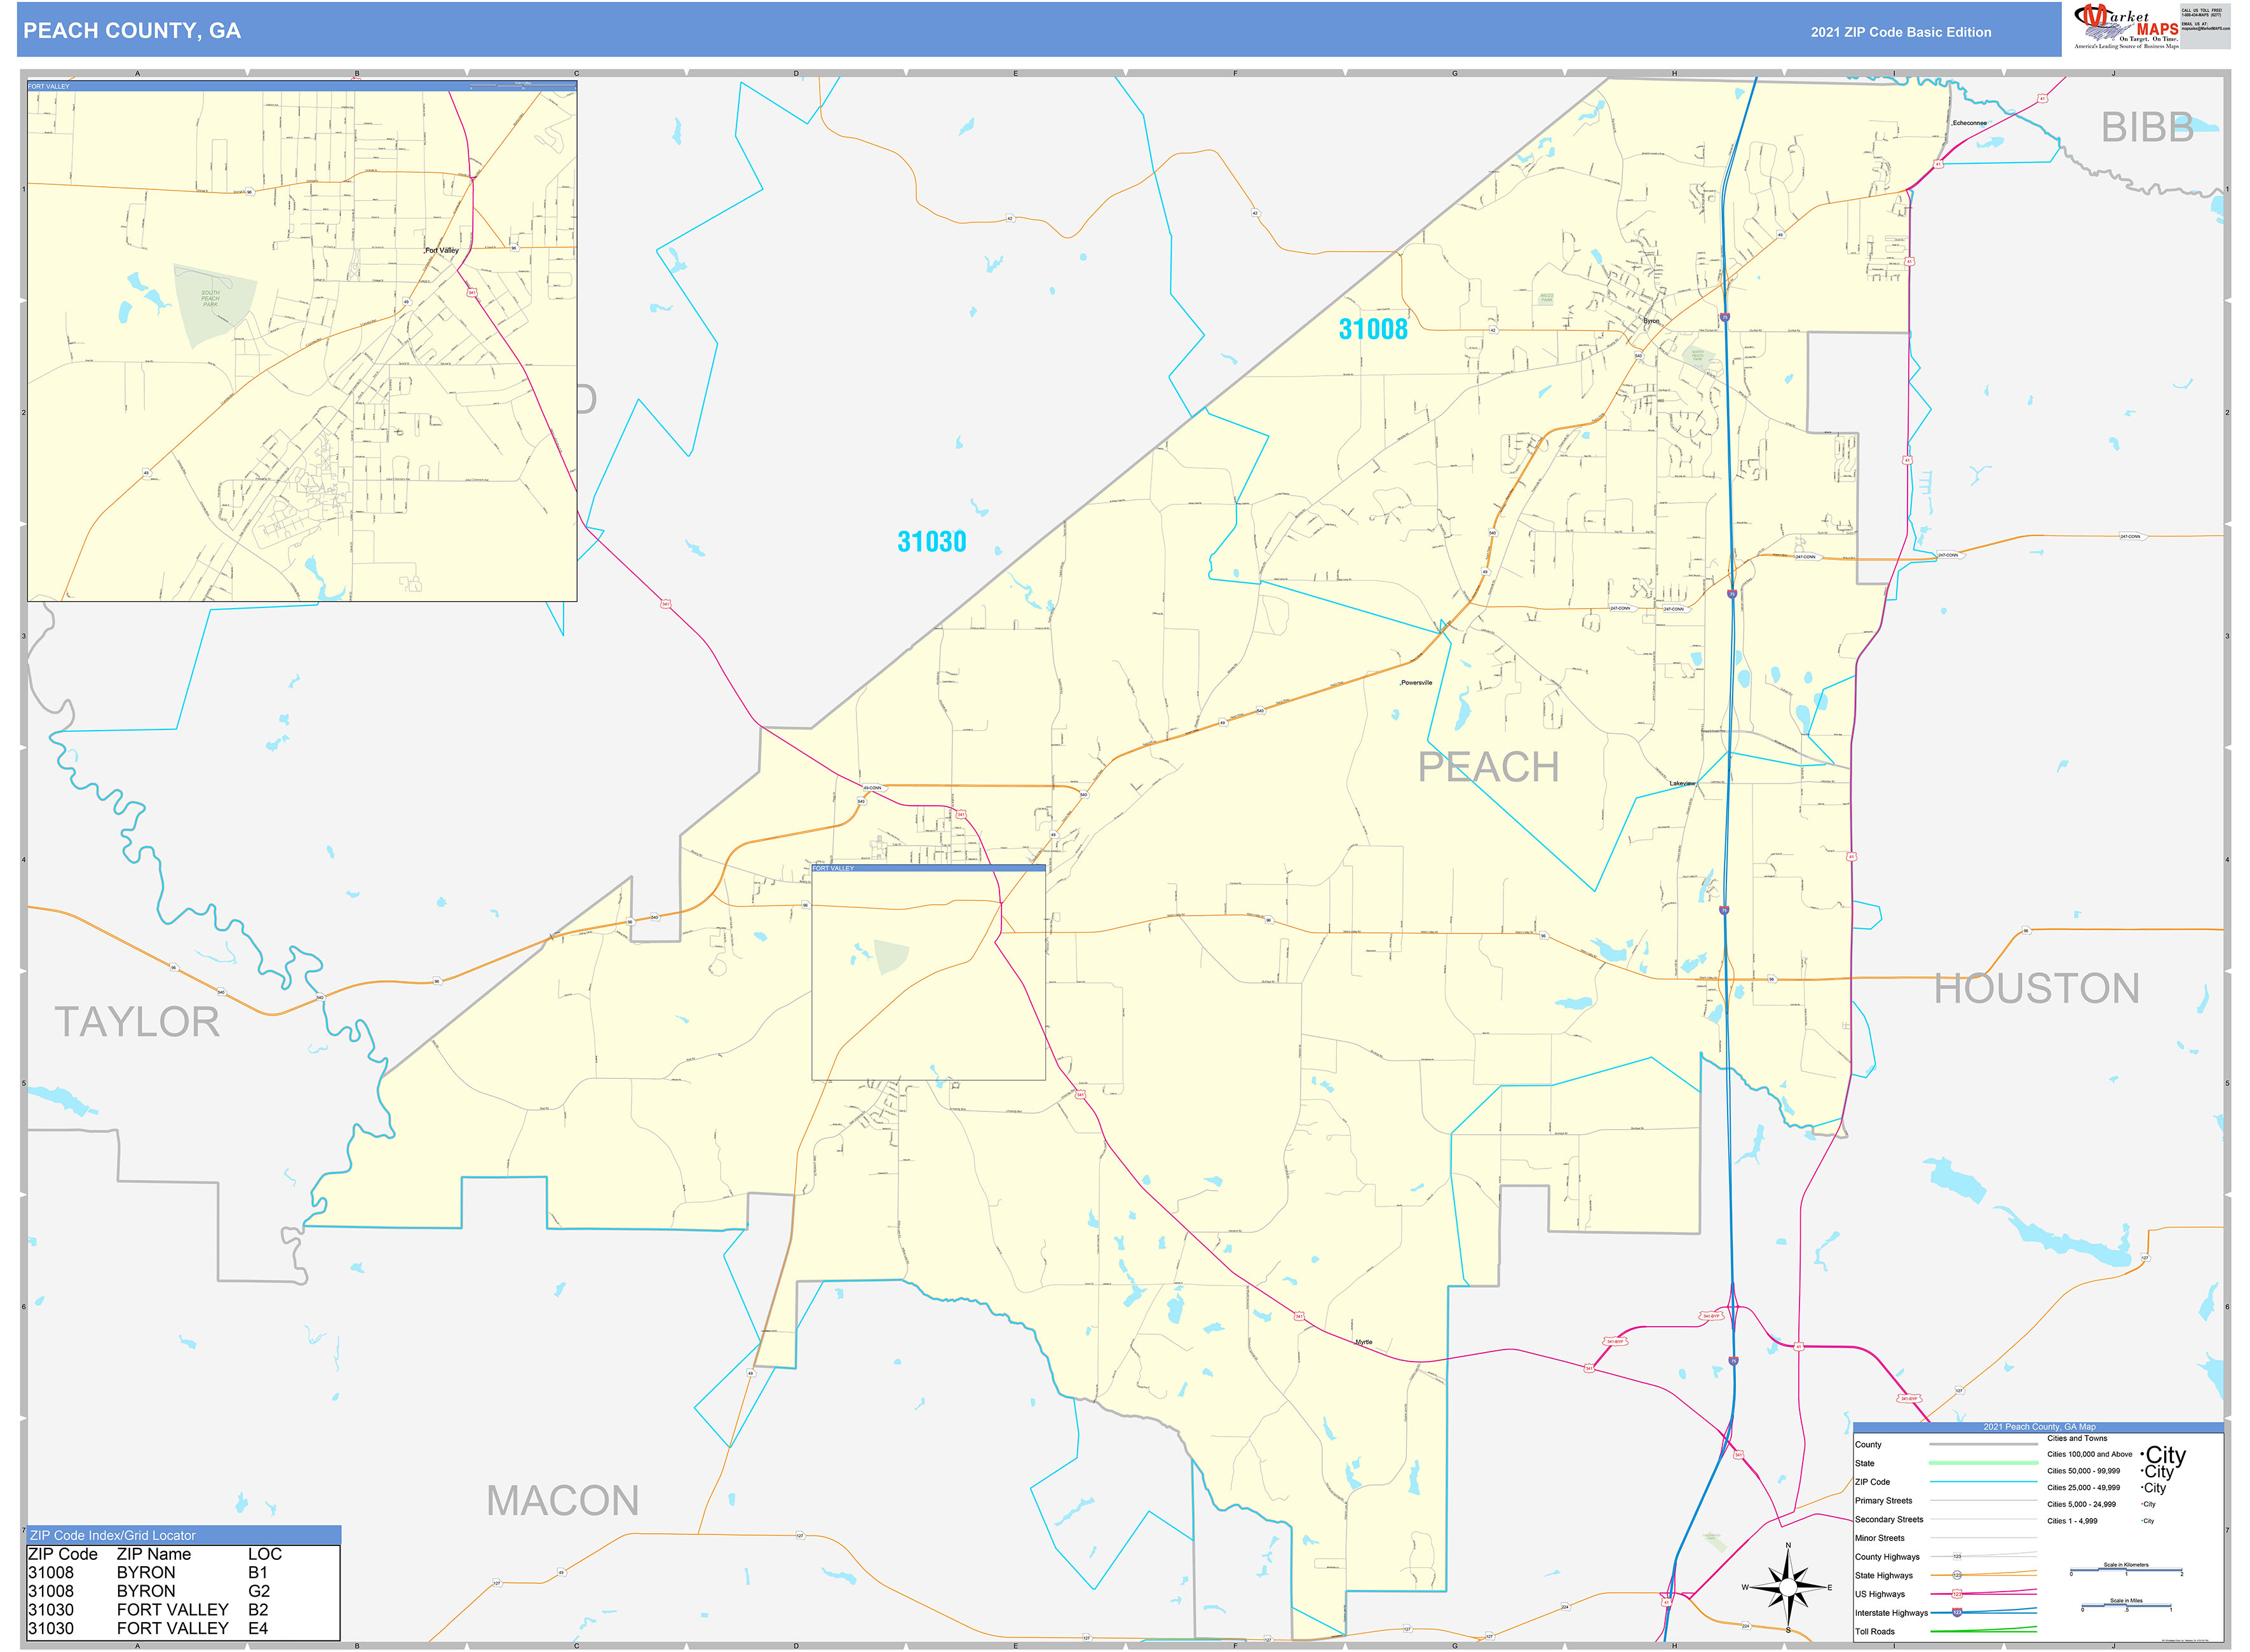 Peach County, GA Zip Code Wall Map Basic Style by MarketMAPS